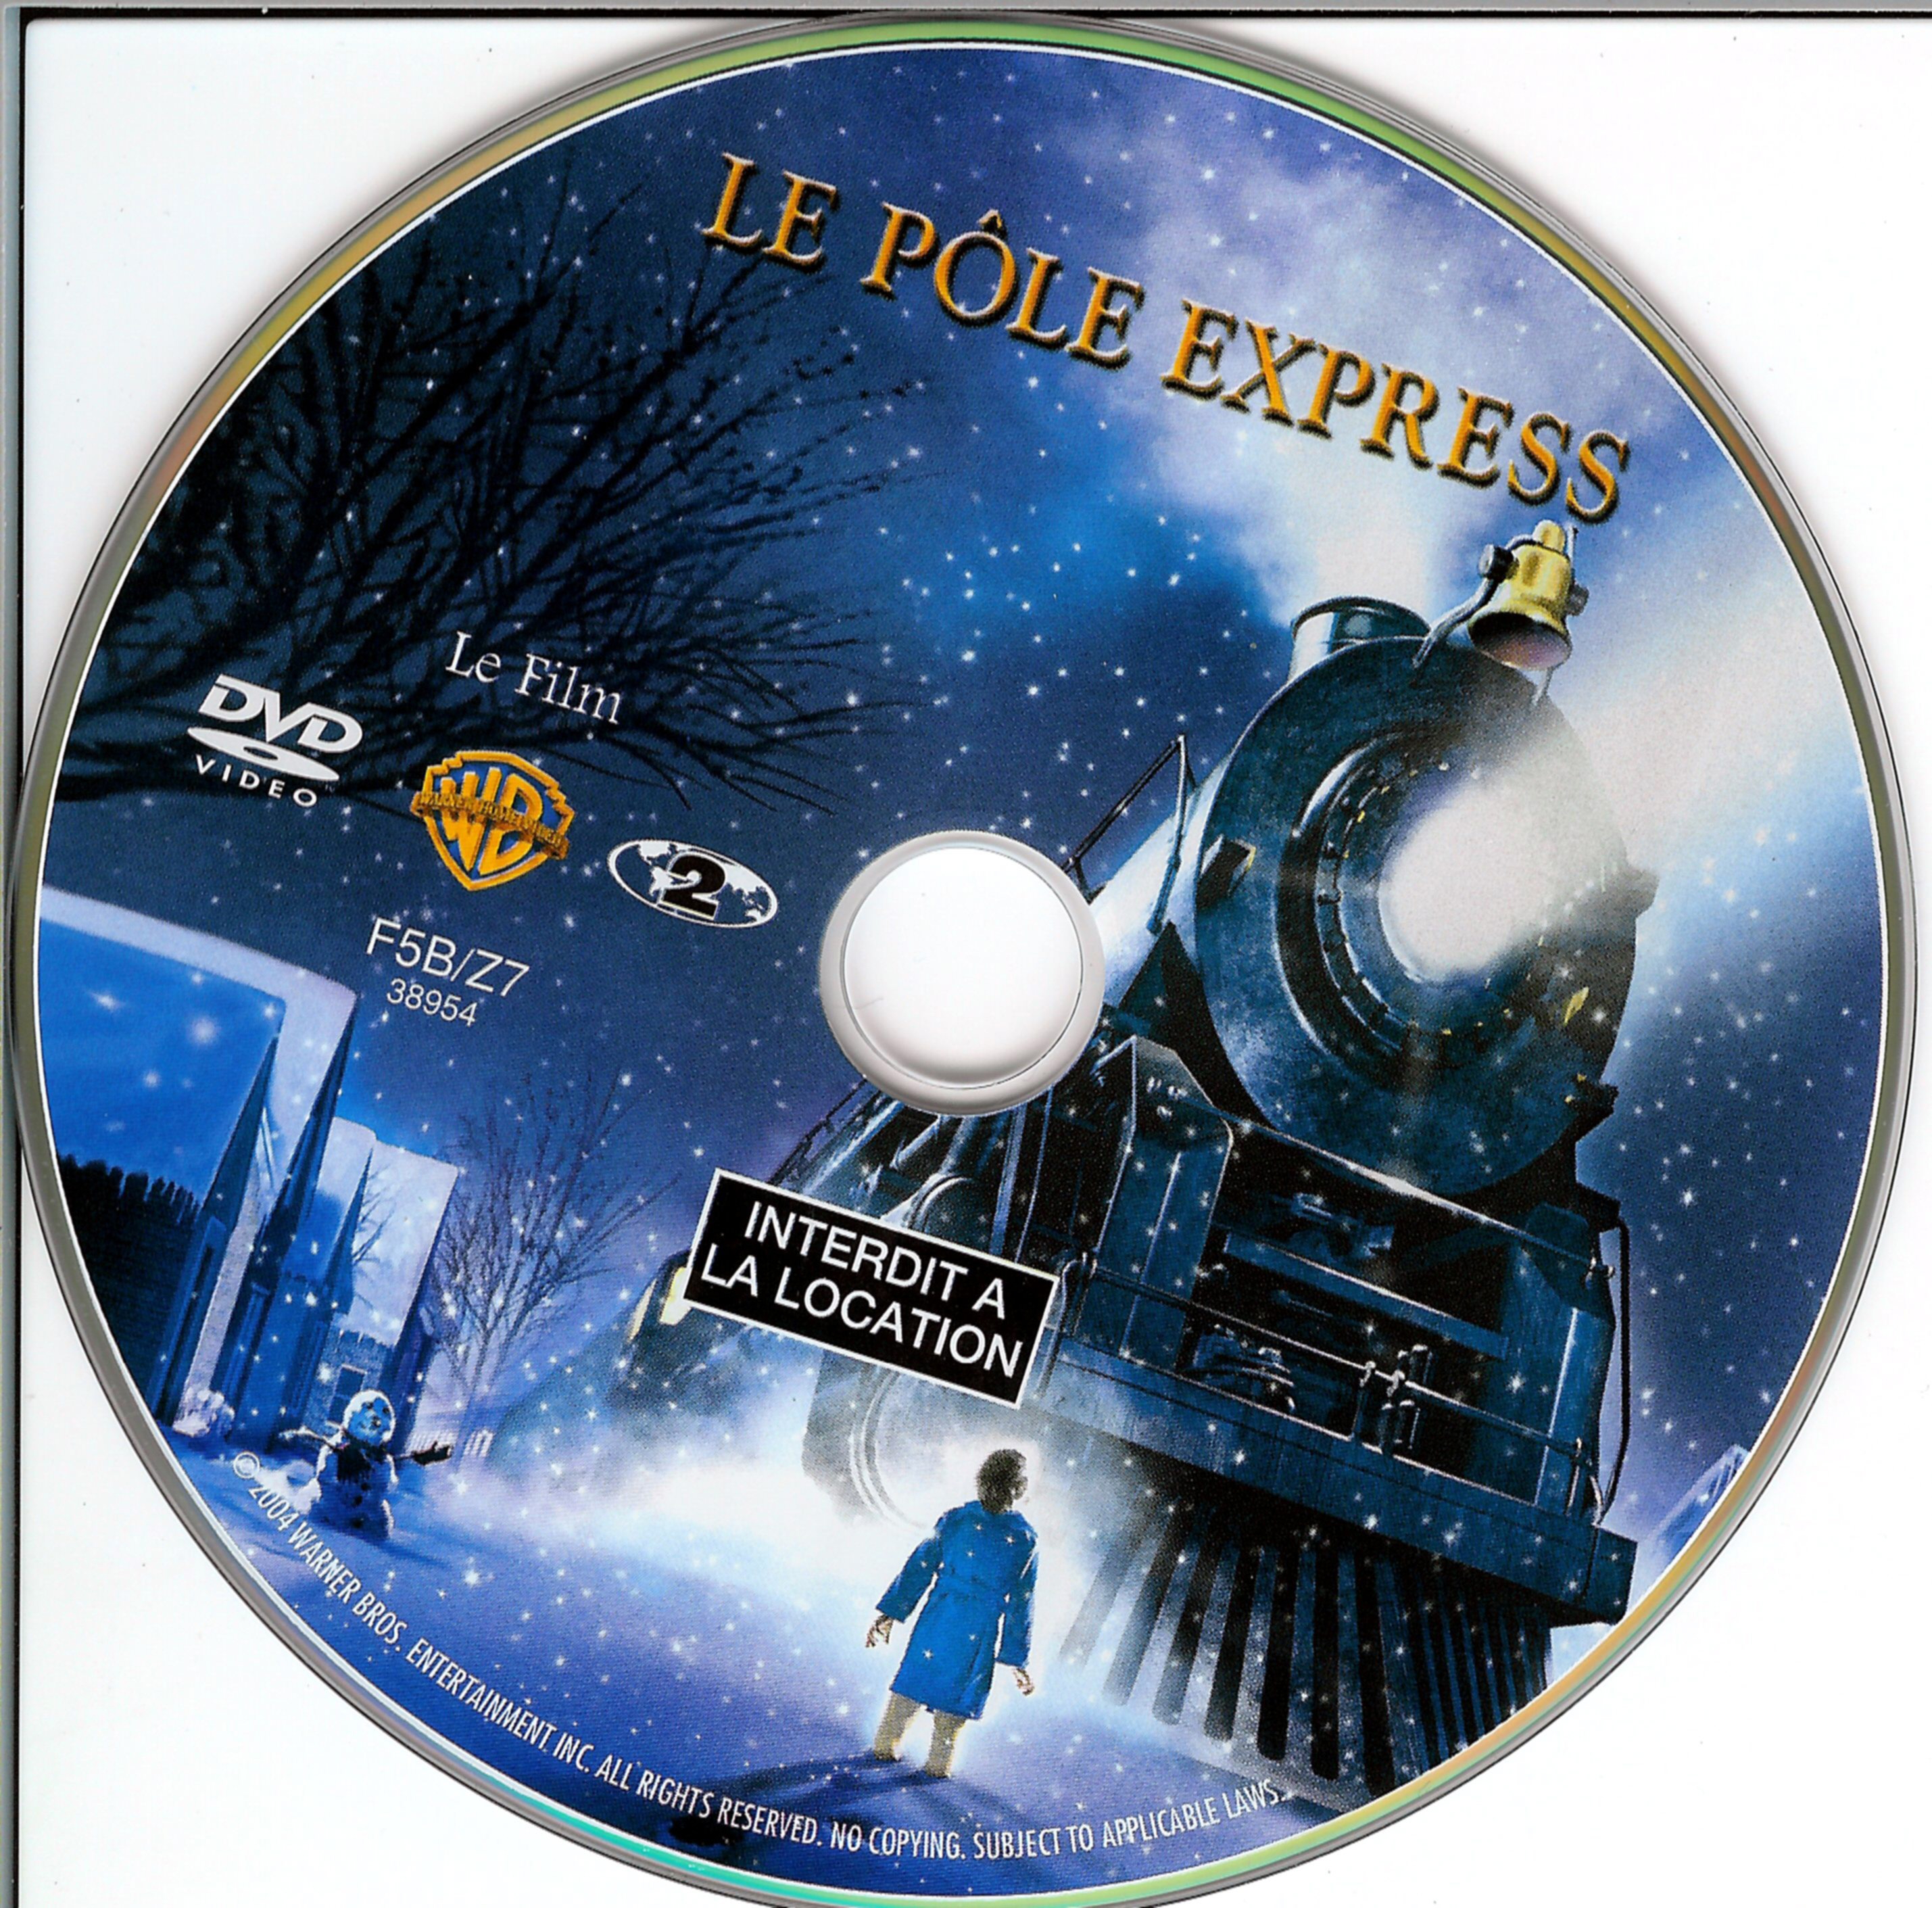 Le pole express DISC 1